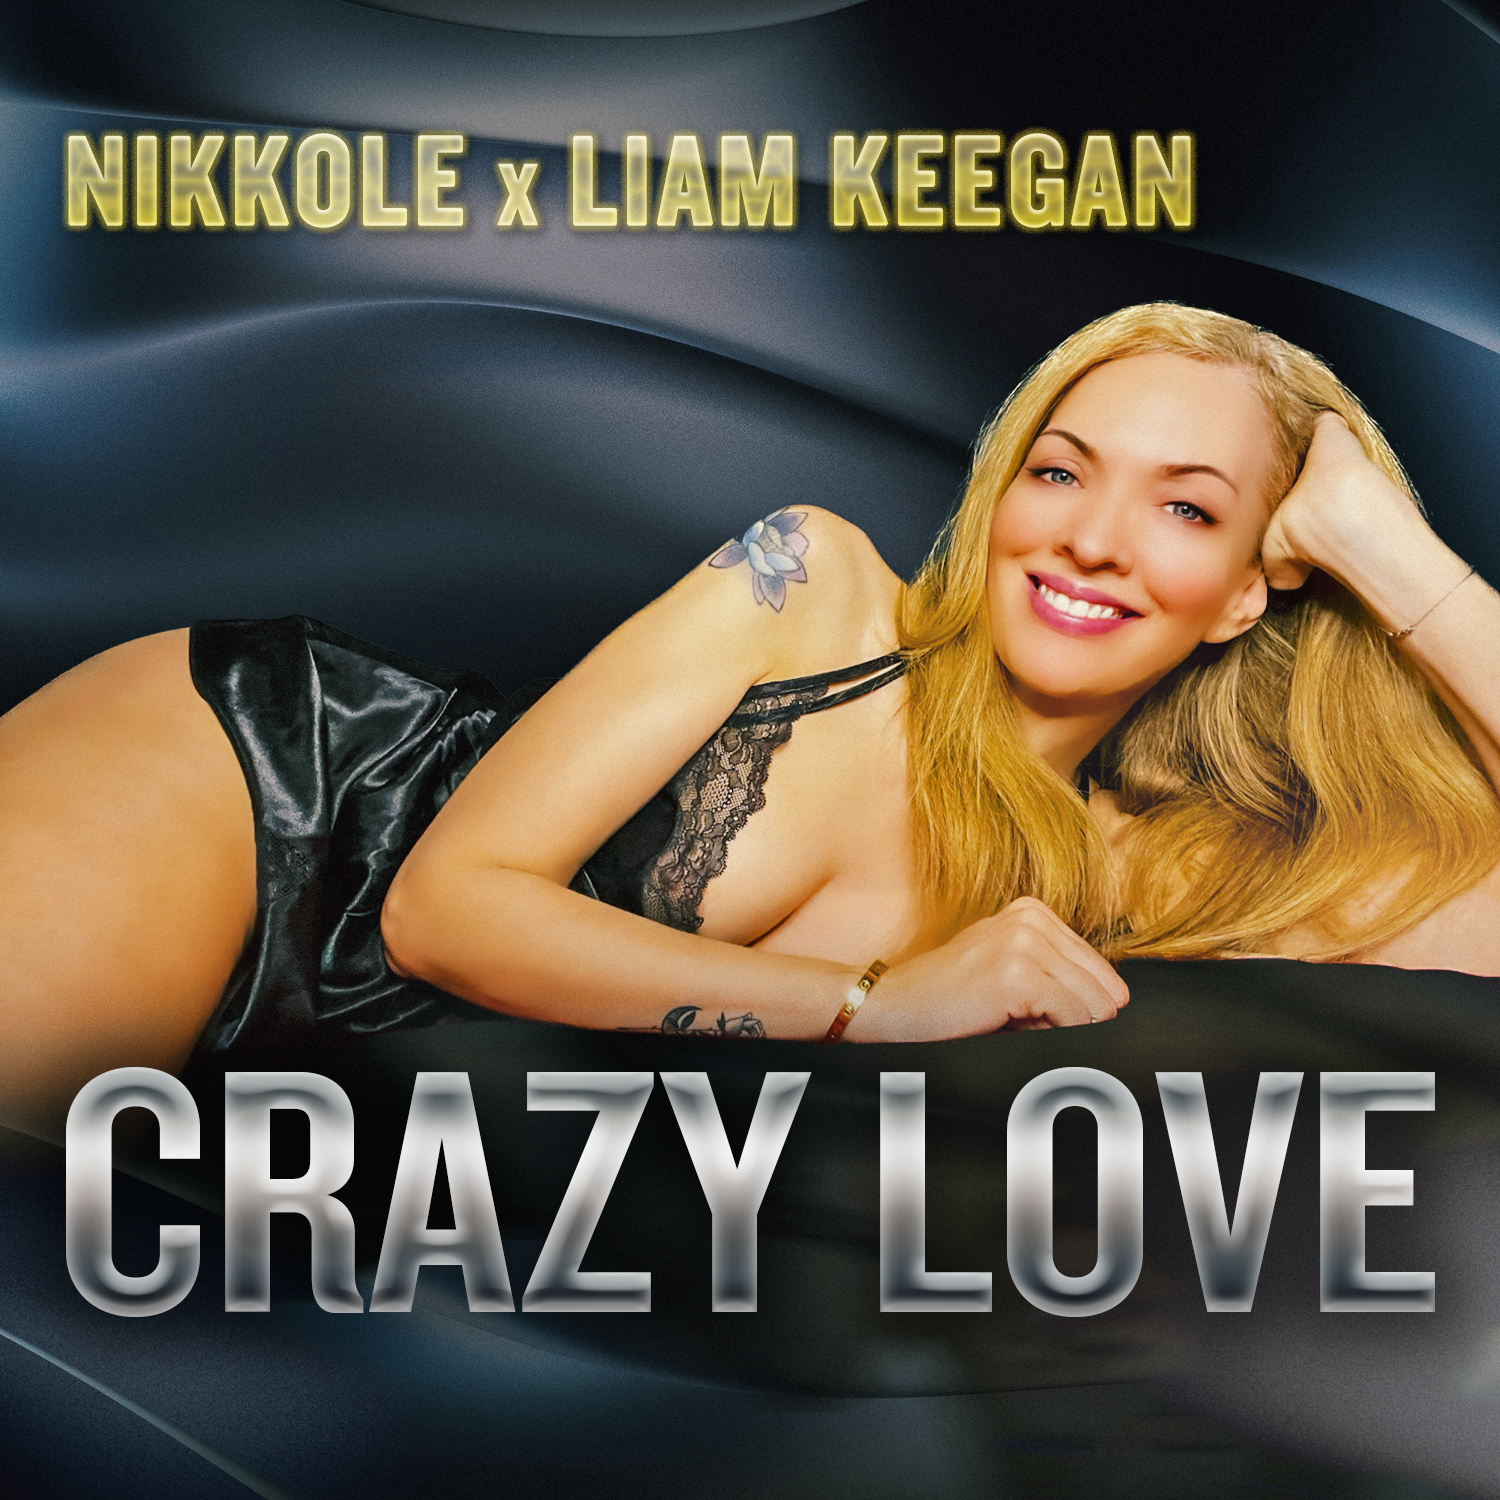 Nikkole x Liam Keegan - Crazy Love